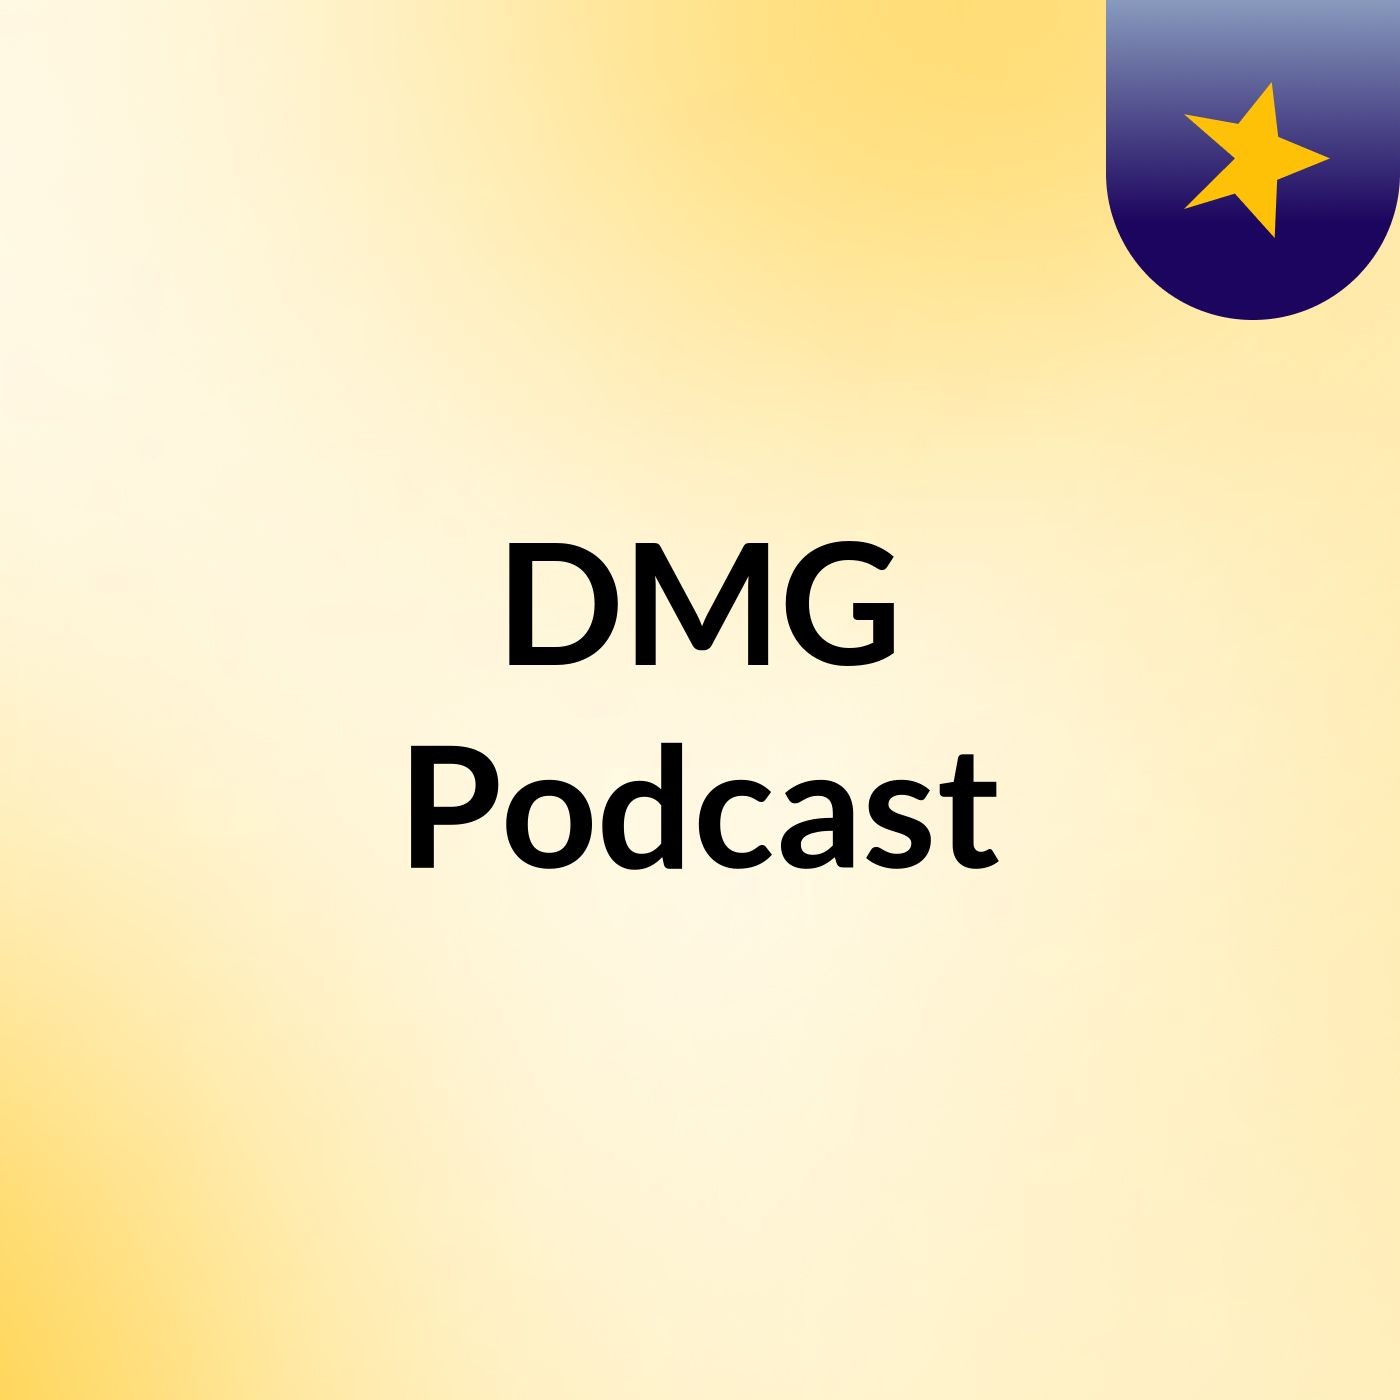 DMG Podcast